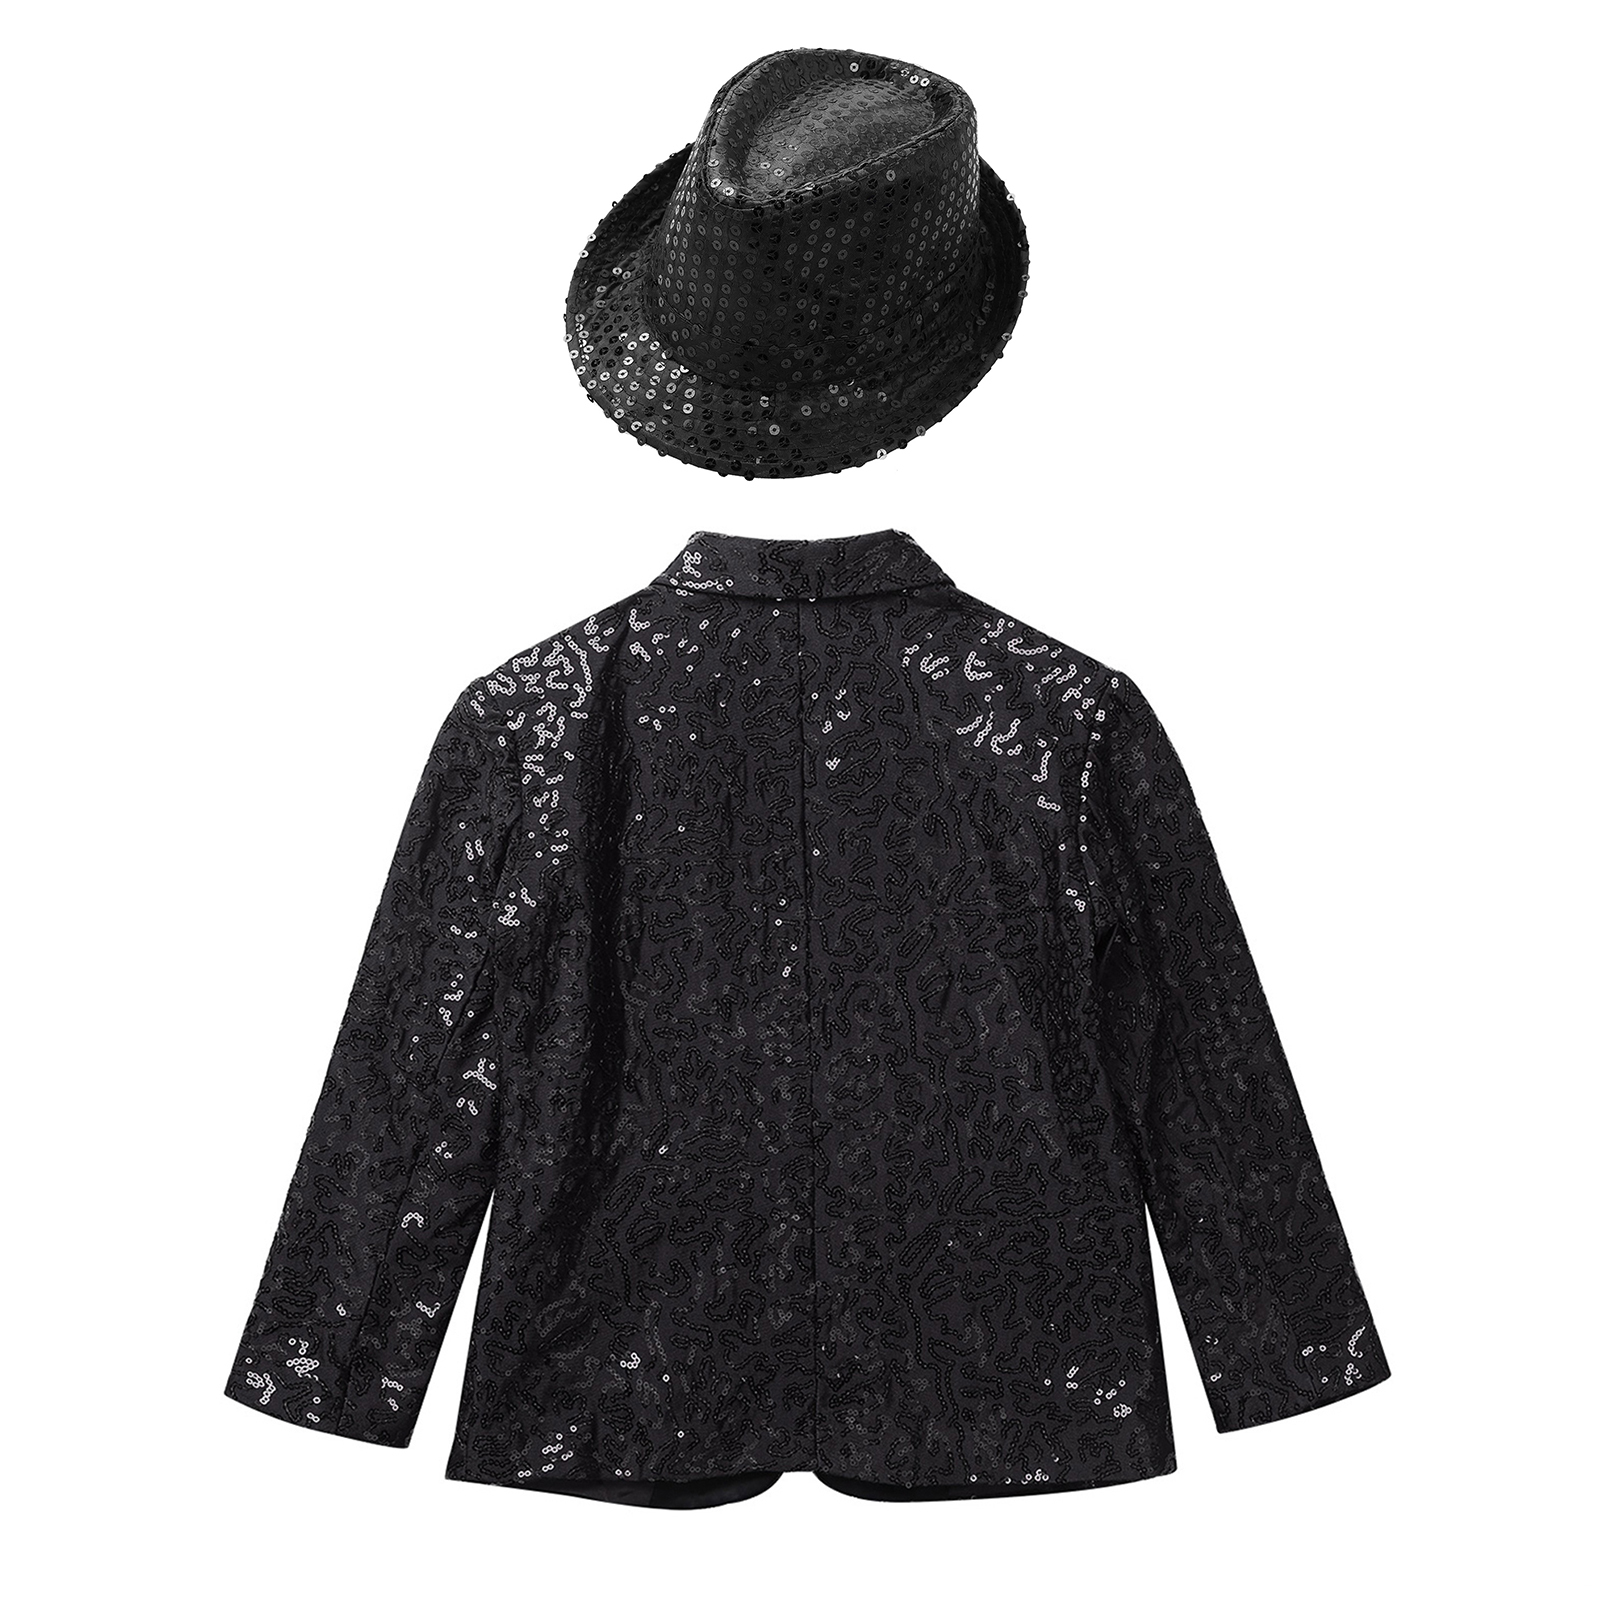 MSemis Kids Boys Shiny Sequin Suit Jacket Party Blazer Dance Tuxedo Costume with Hat,Size 6-16 Black 10 - image 4 of 6